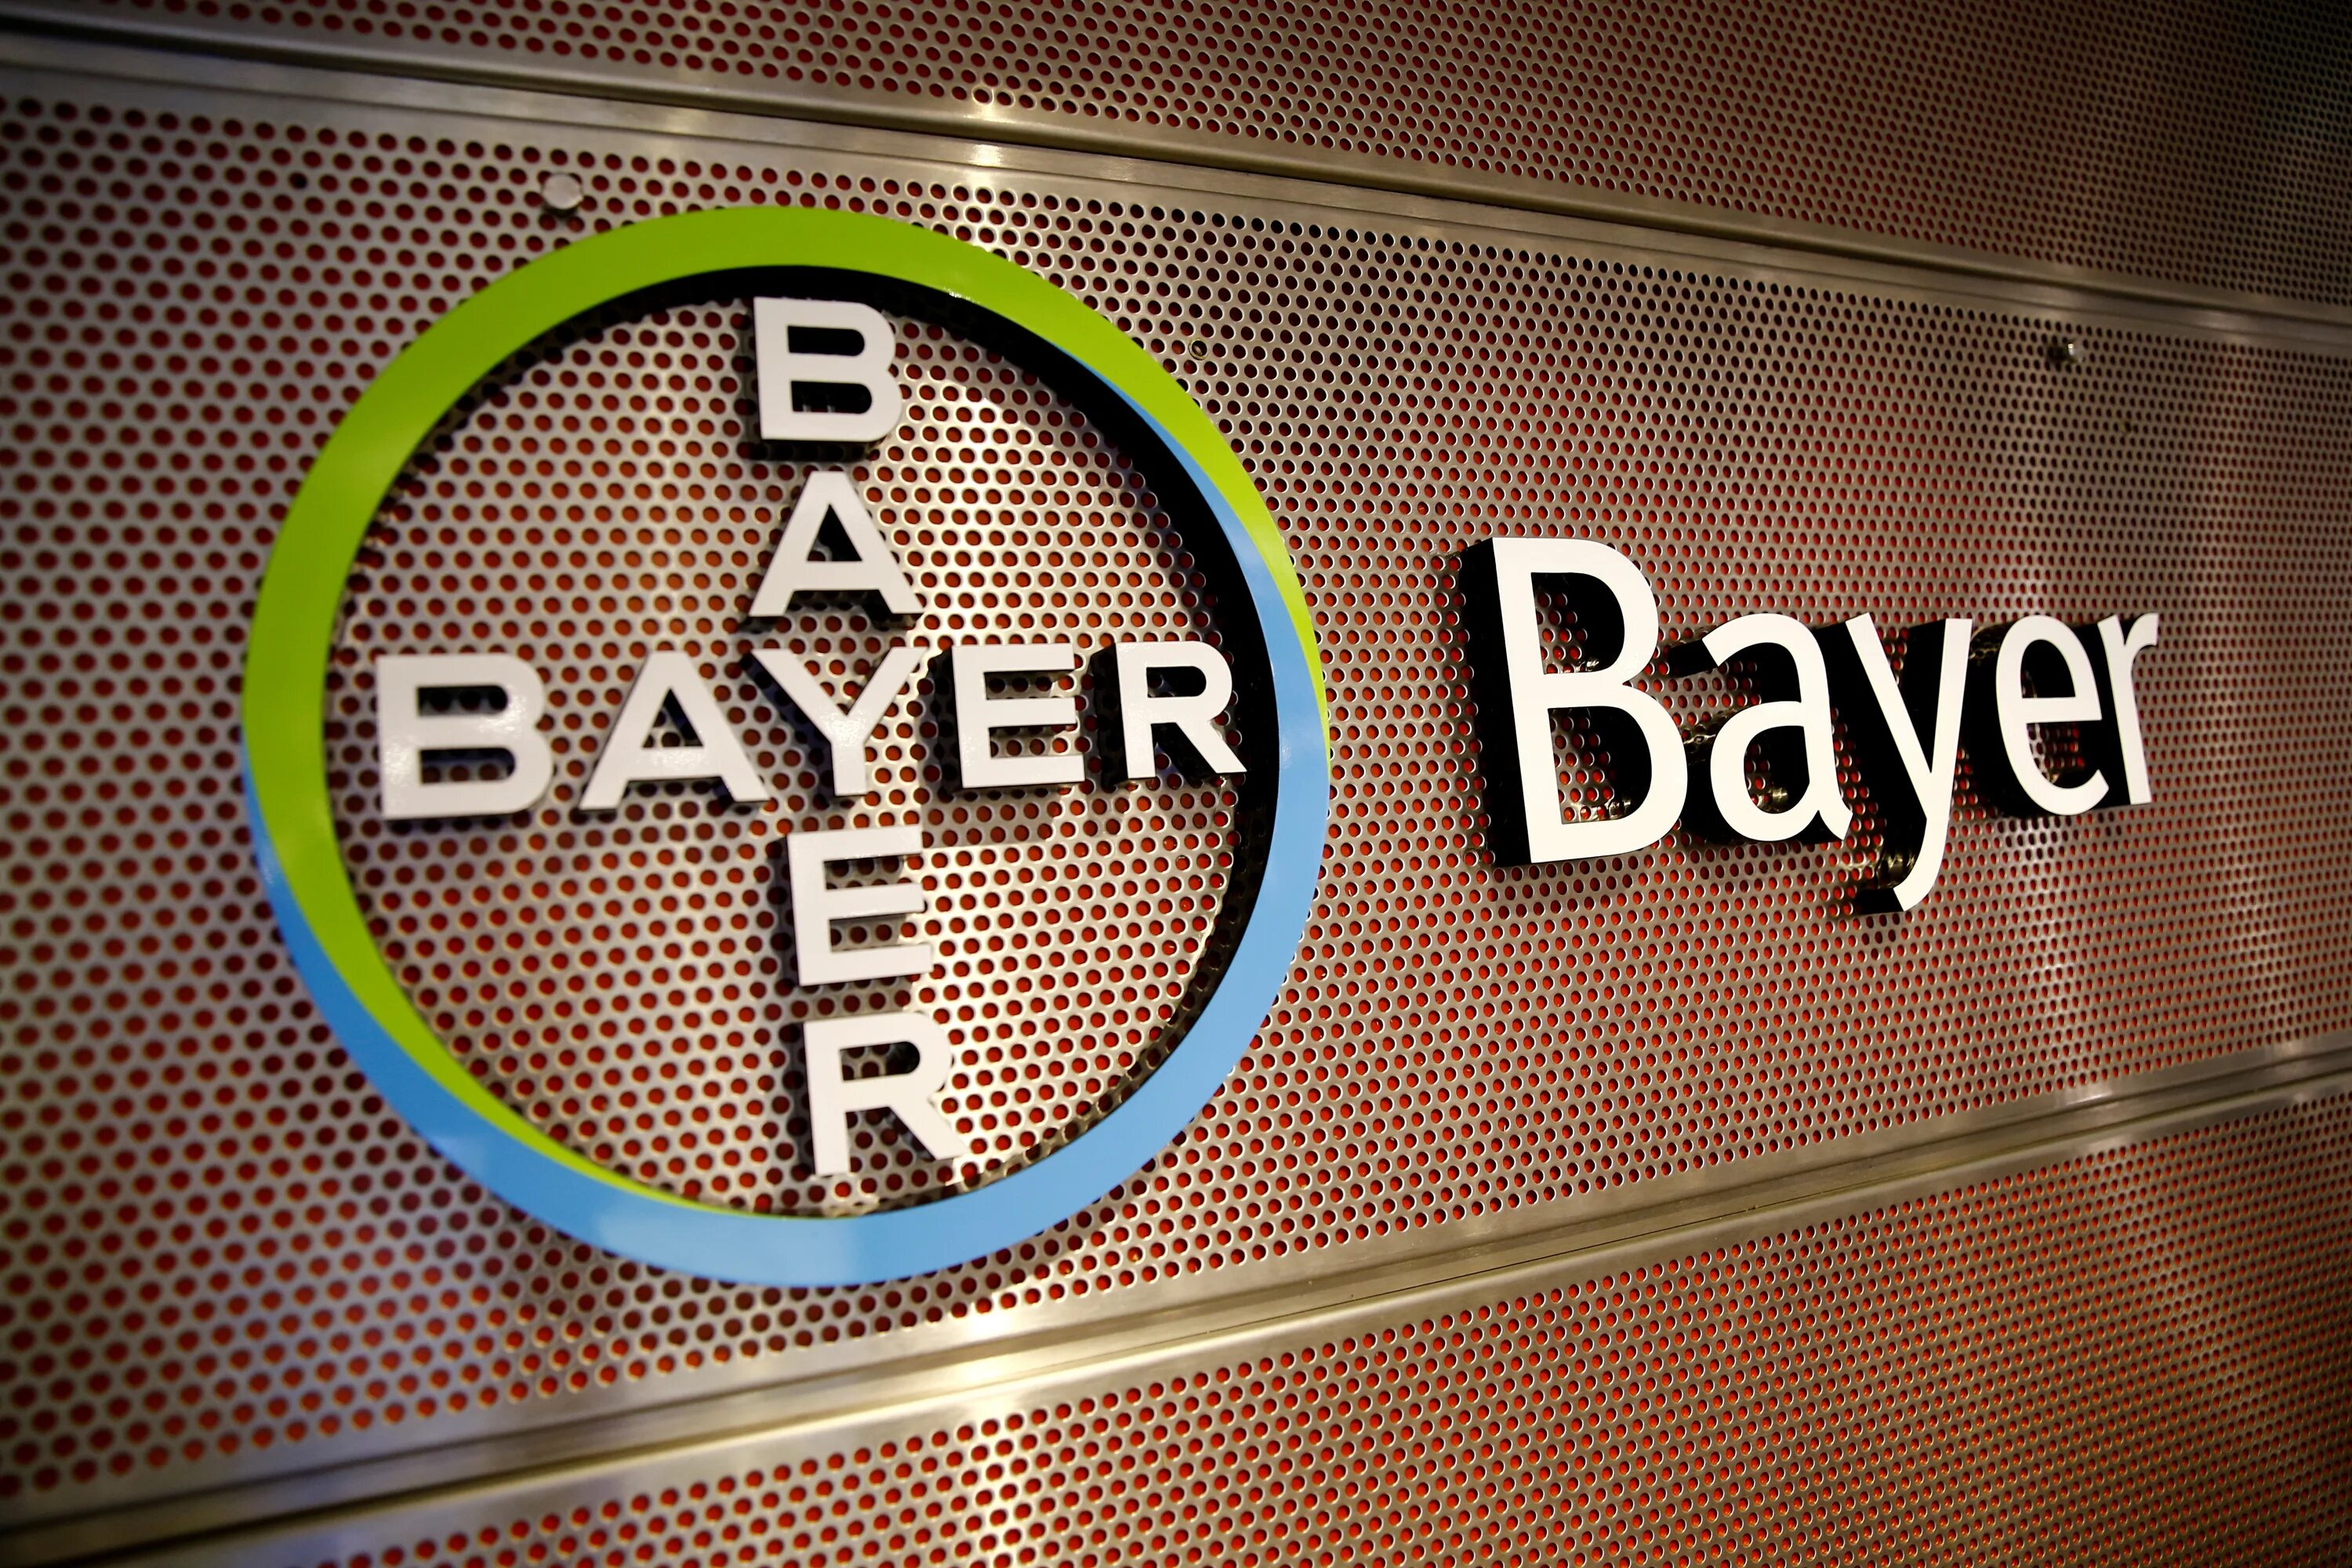 Bayer. Фирма Bayer. Байер фармацевтическая компания. Байер логотип.